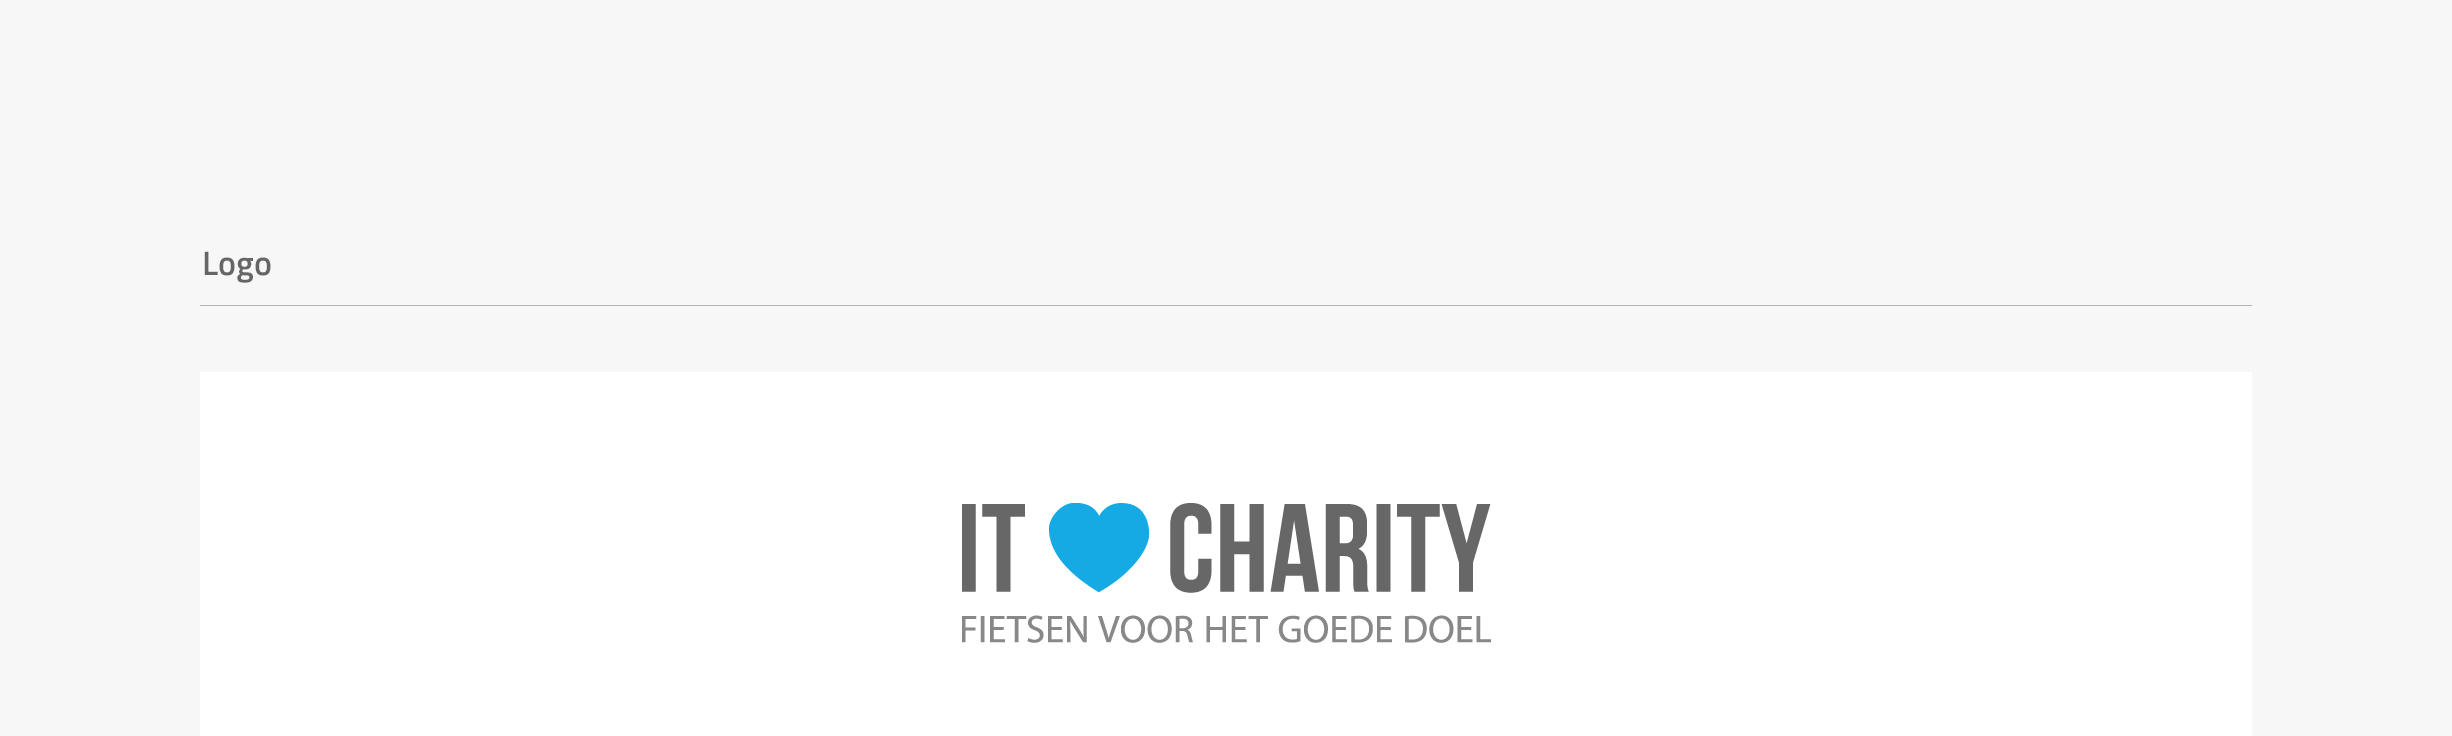 IT for Charity website - final logo